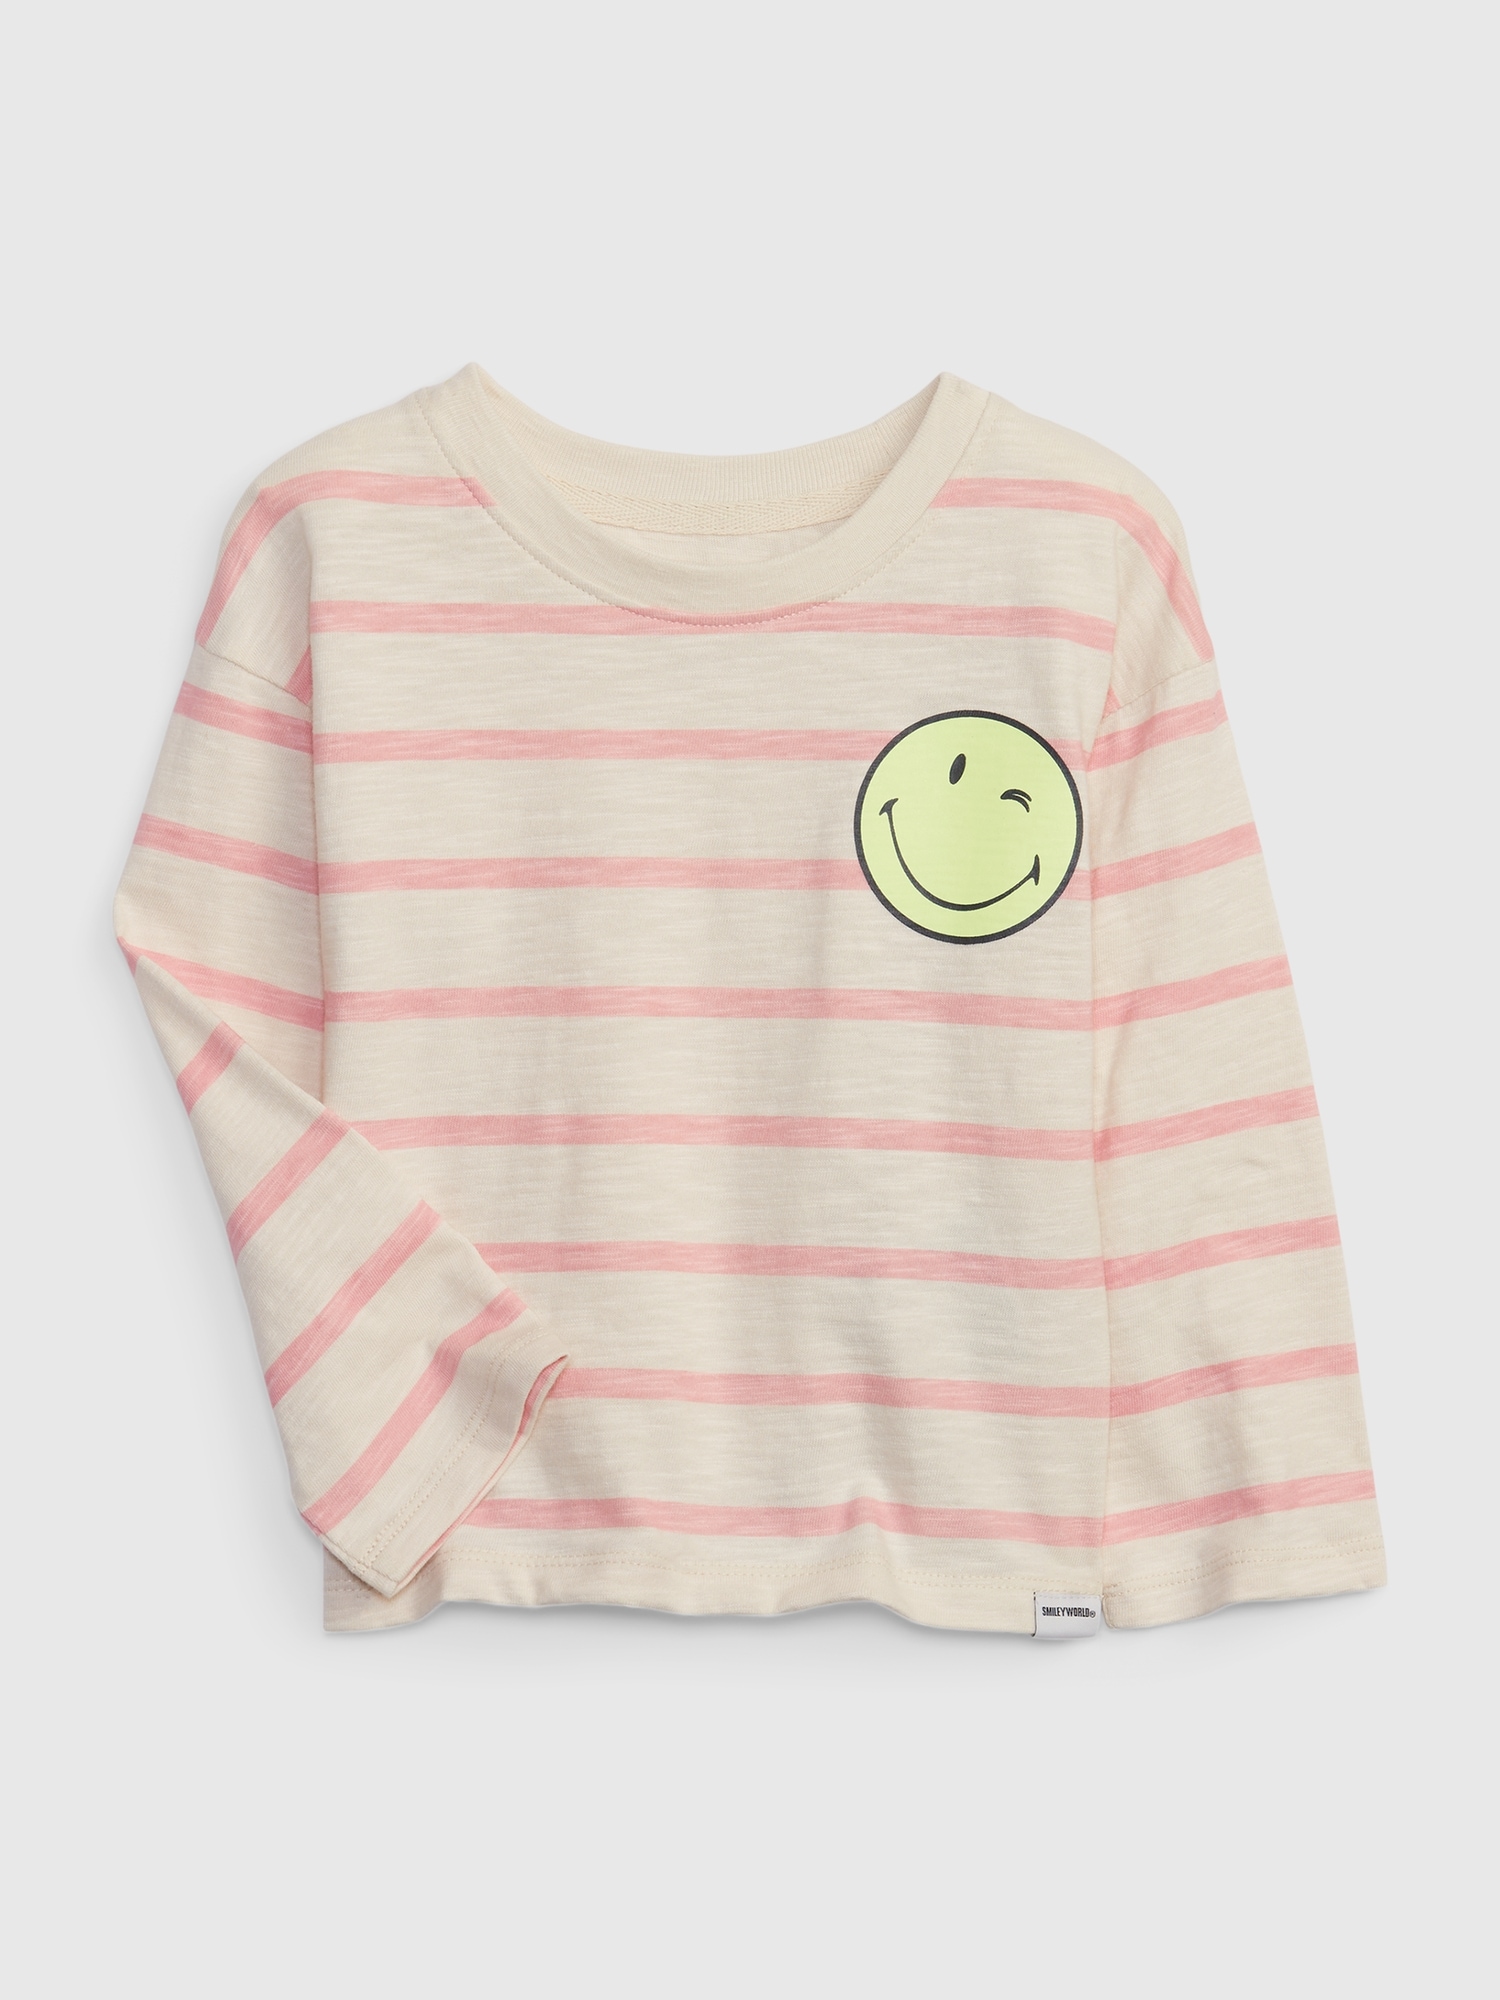 Gapロゴ スマイリー® グラフィックtシャツ (幼児)